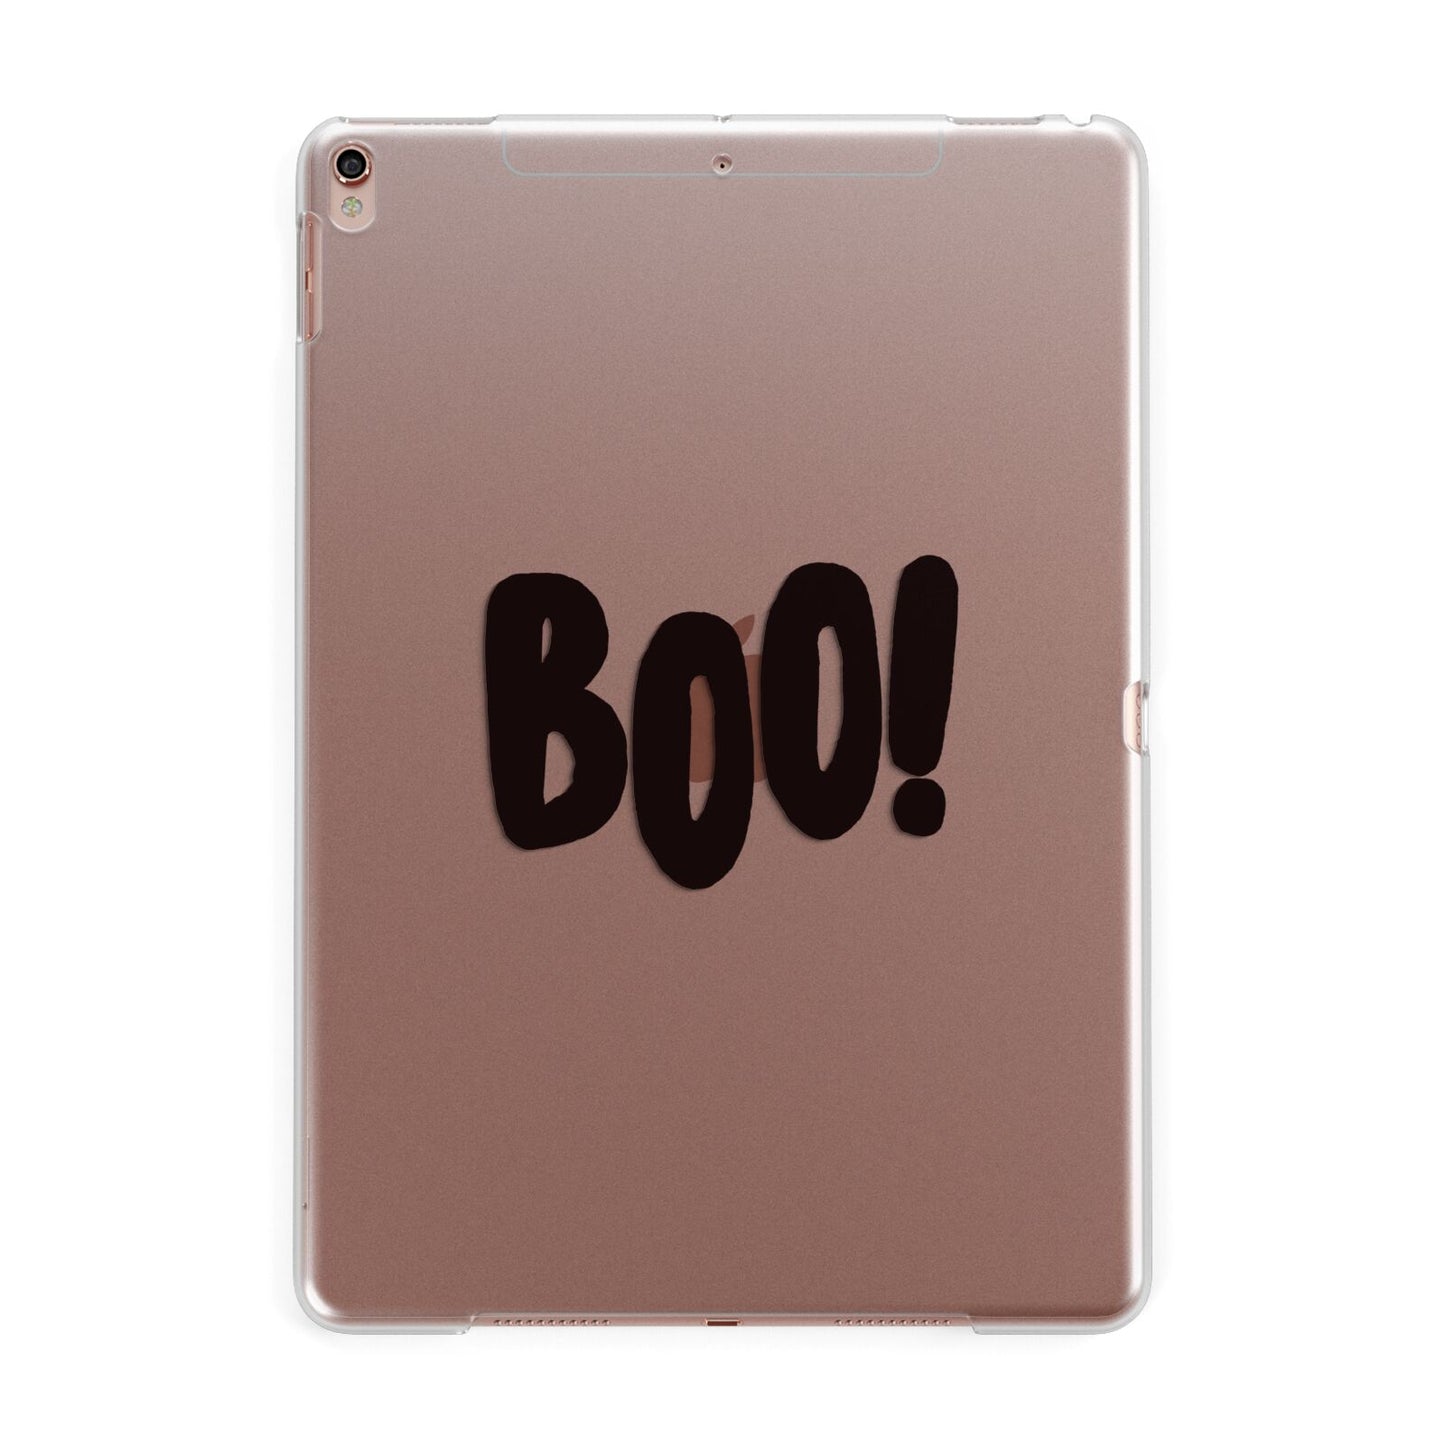 Boo Black Apple iPad Rose Gold Case